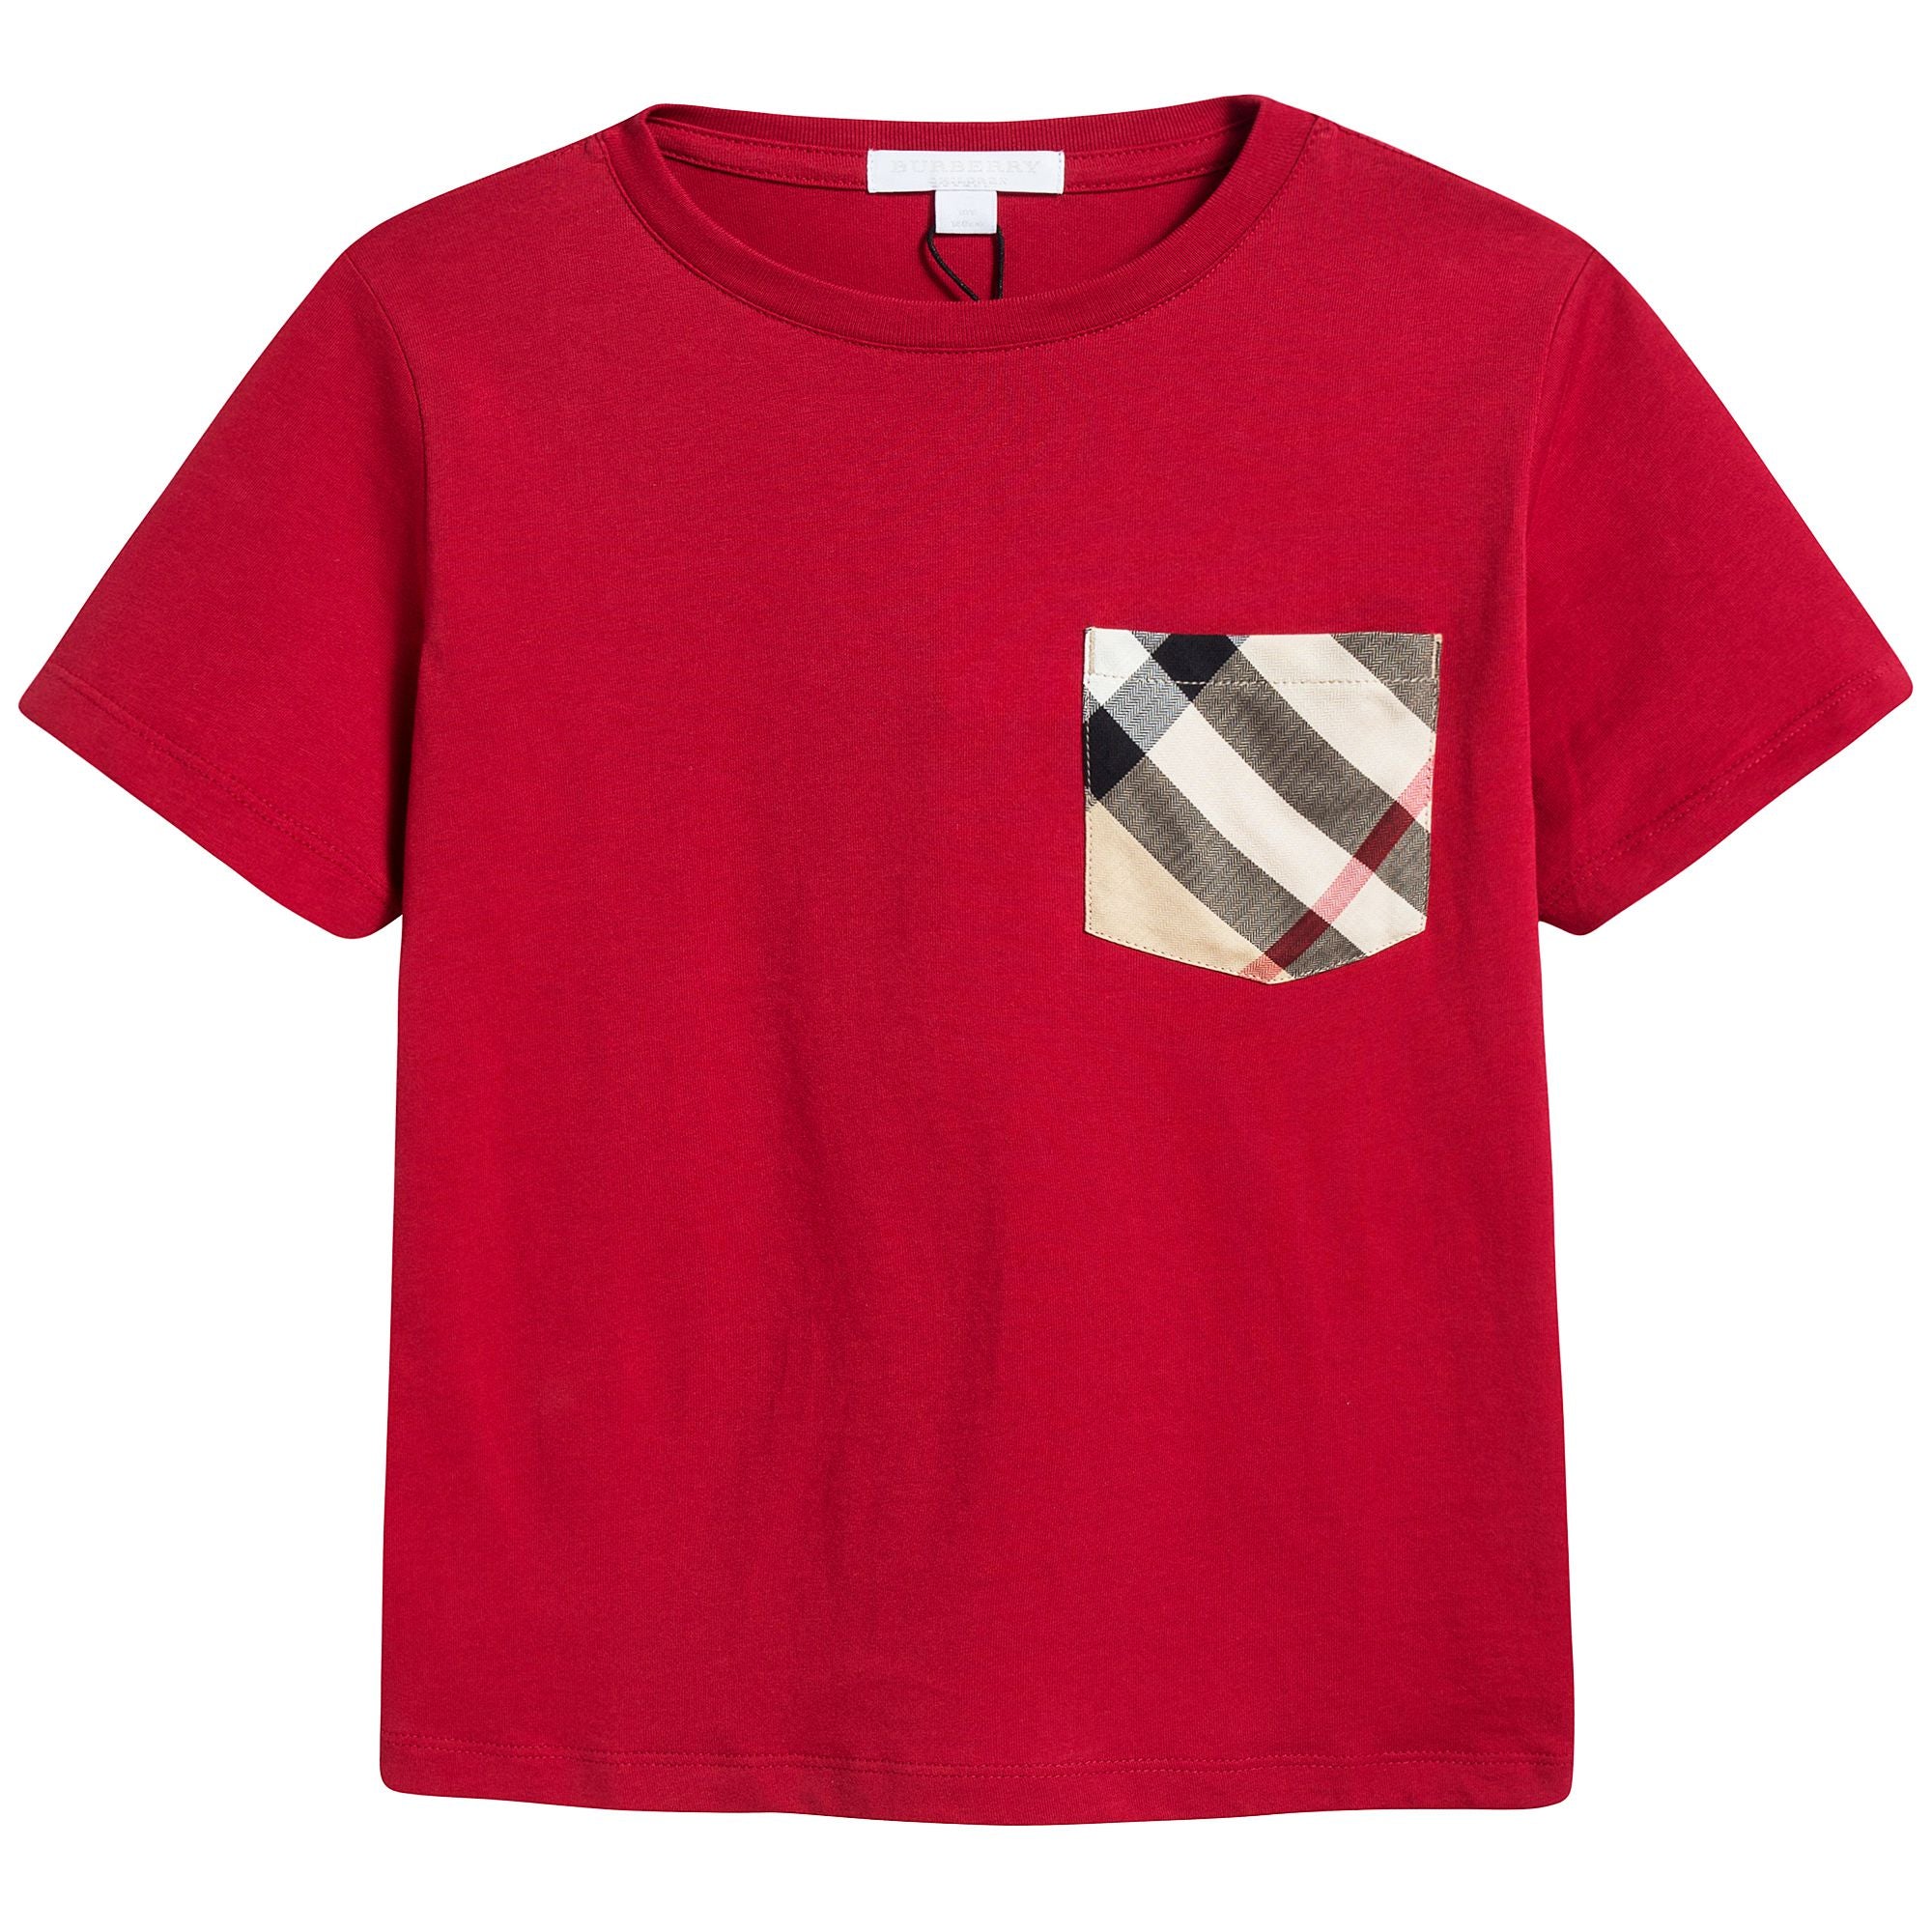 Boys Red Cotton T-shirt